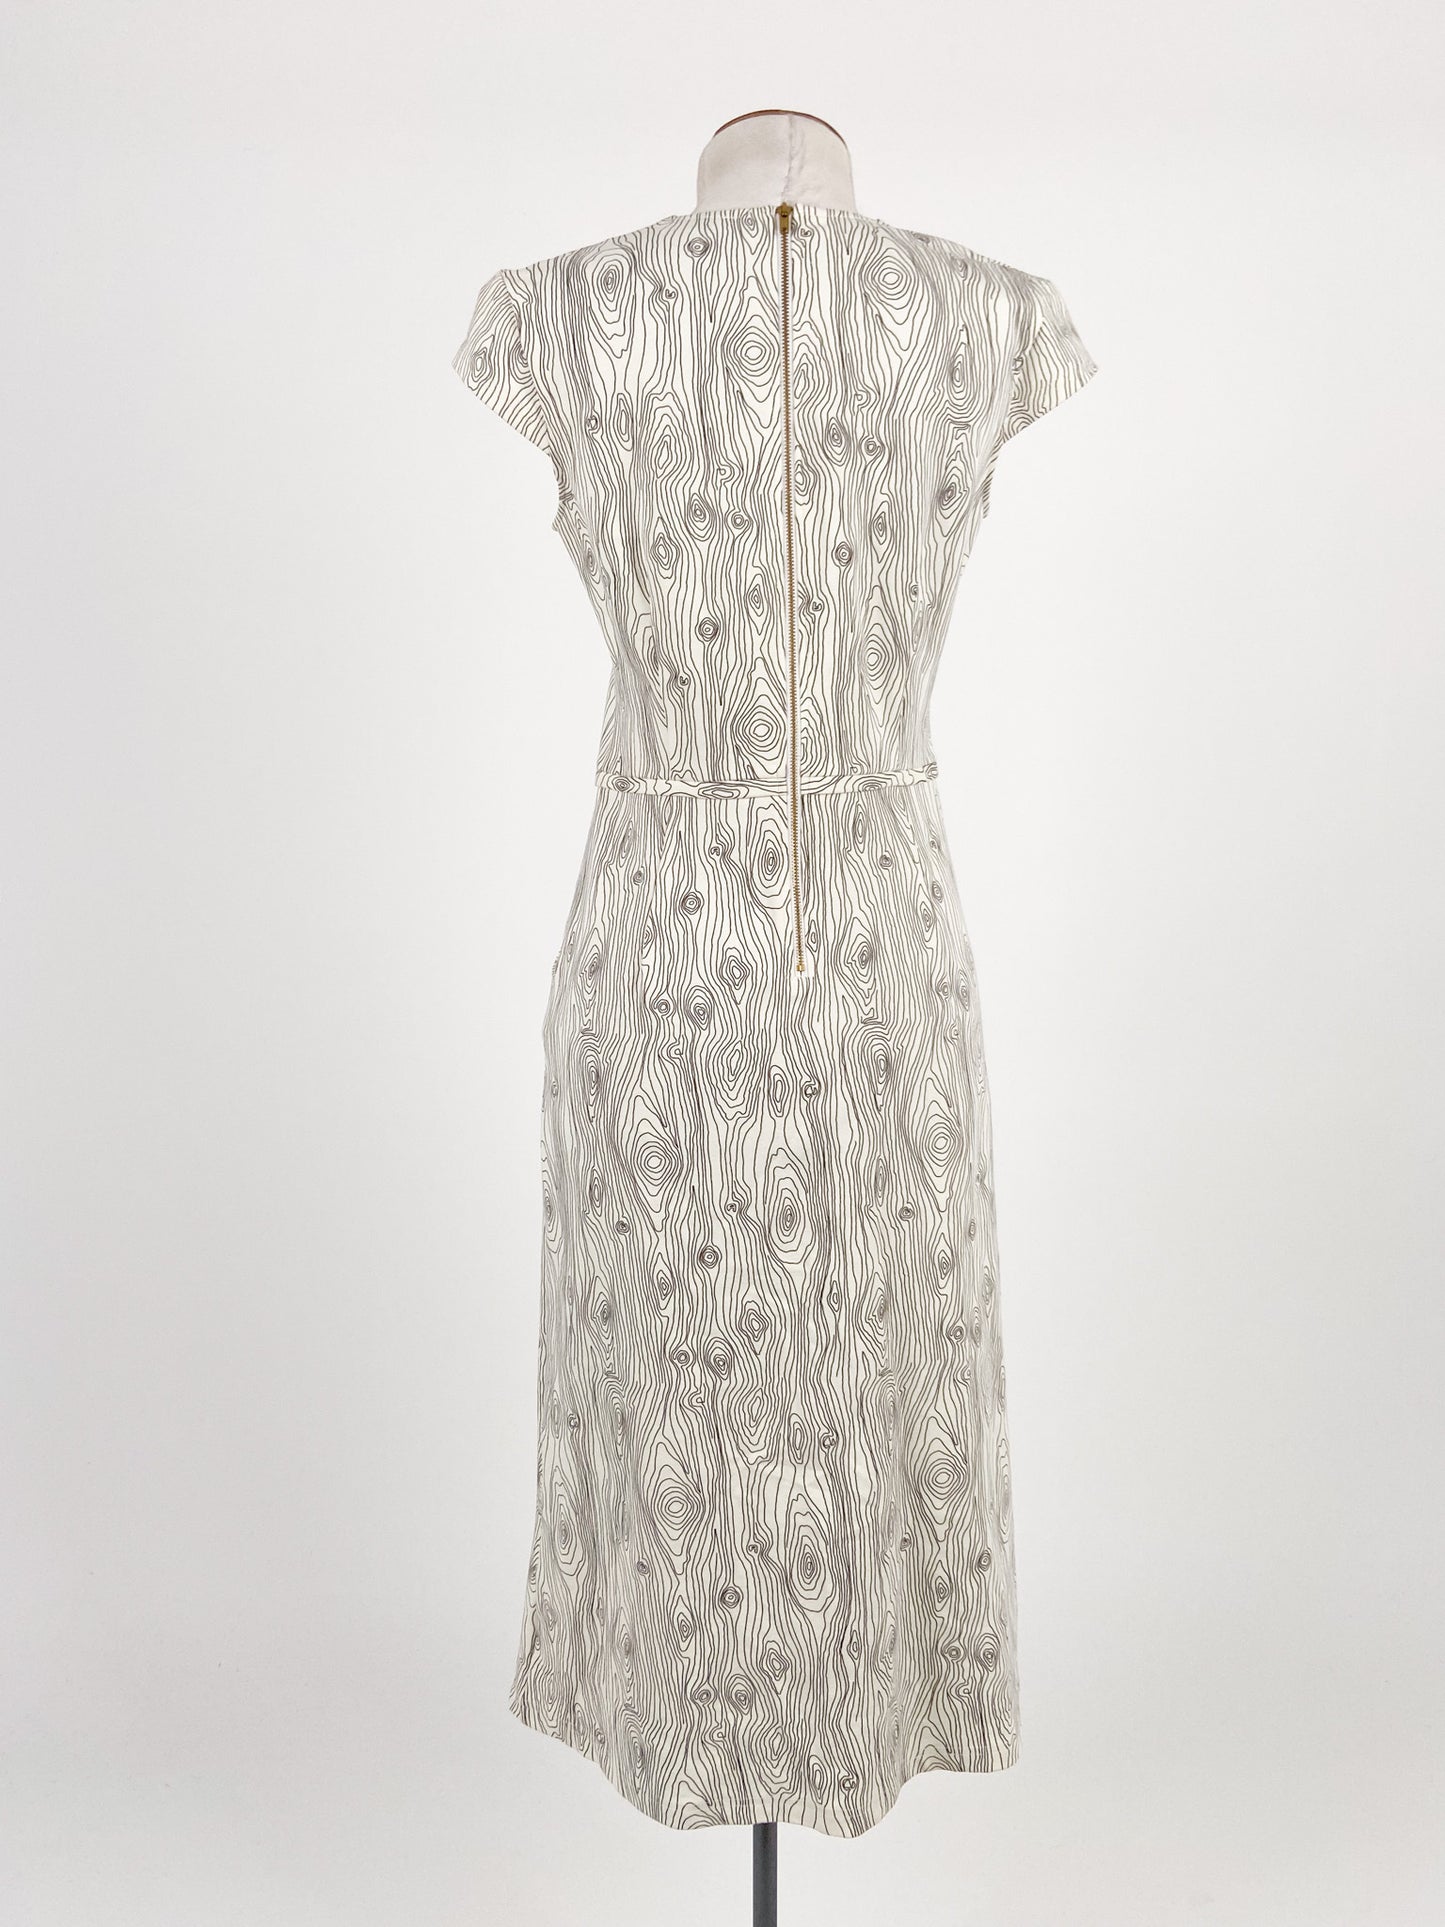 Kate Sylvester | White Workwear Dress | Size S